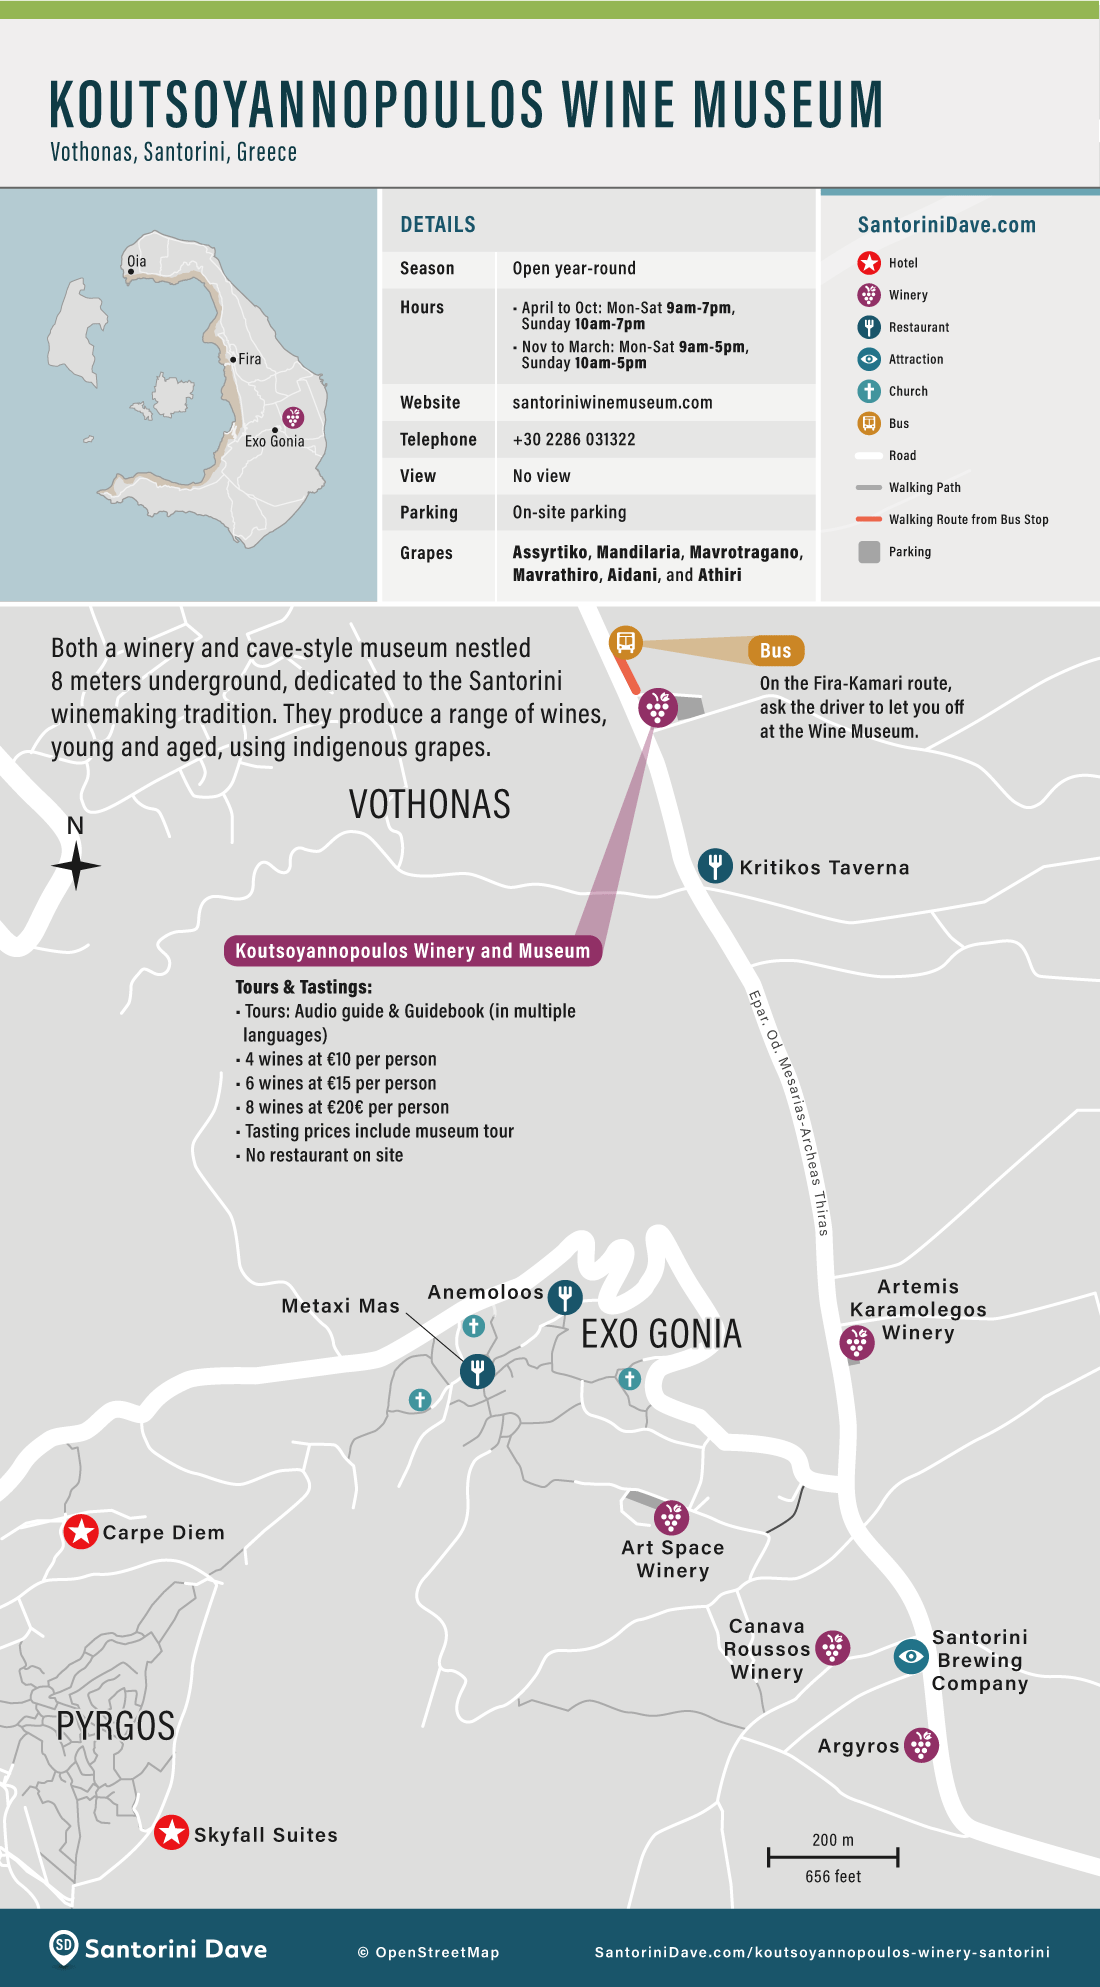 Map showing the area around the Santorini Wine Museum